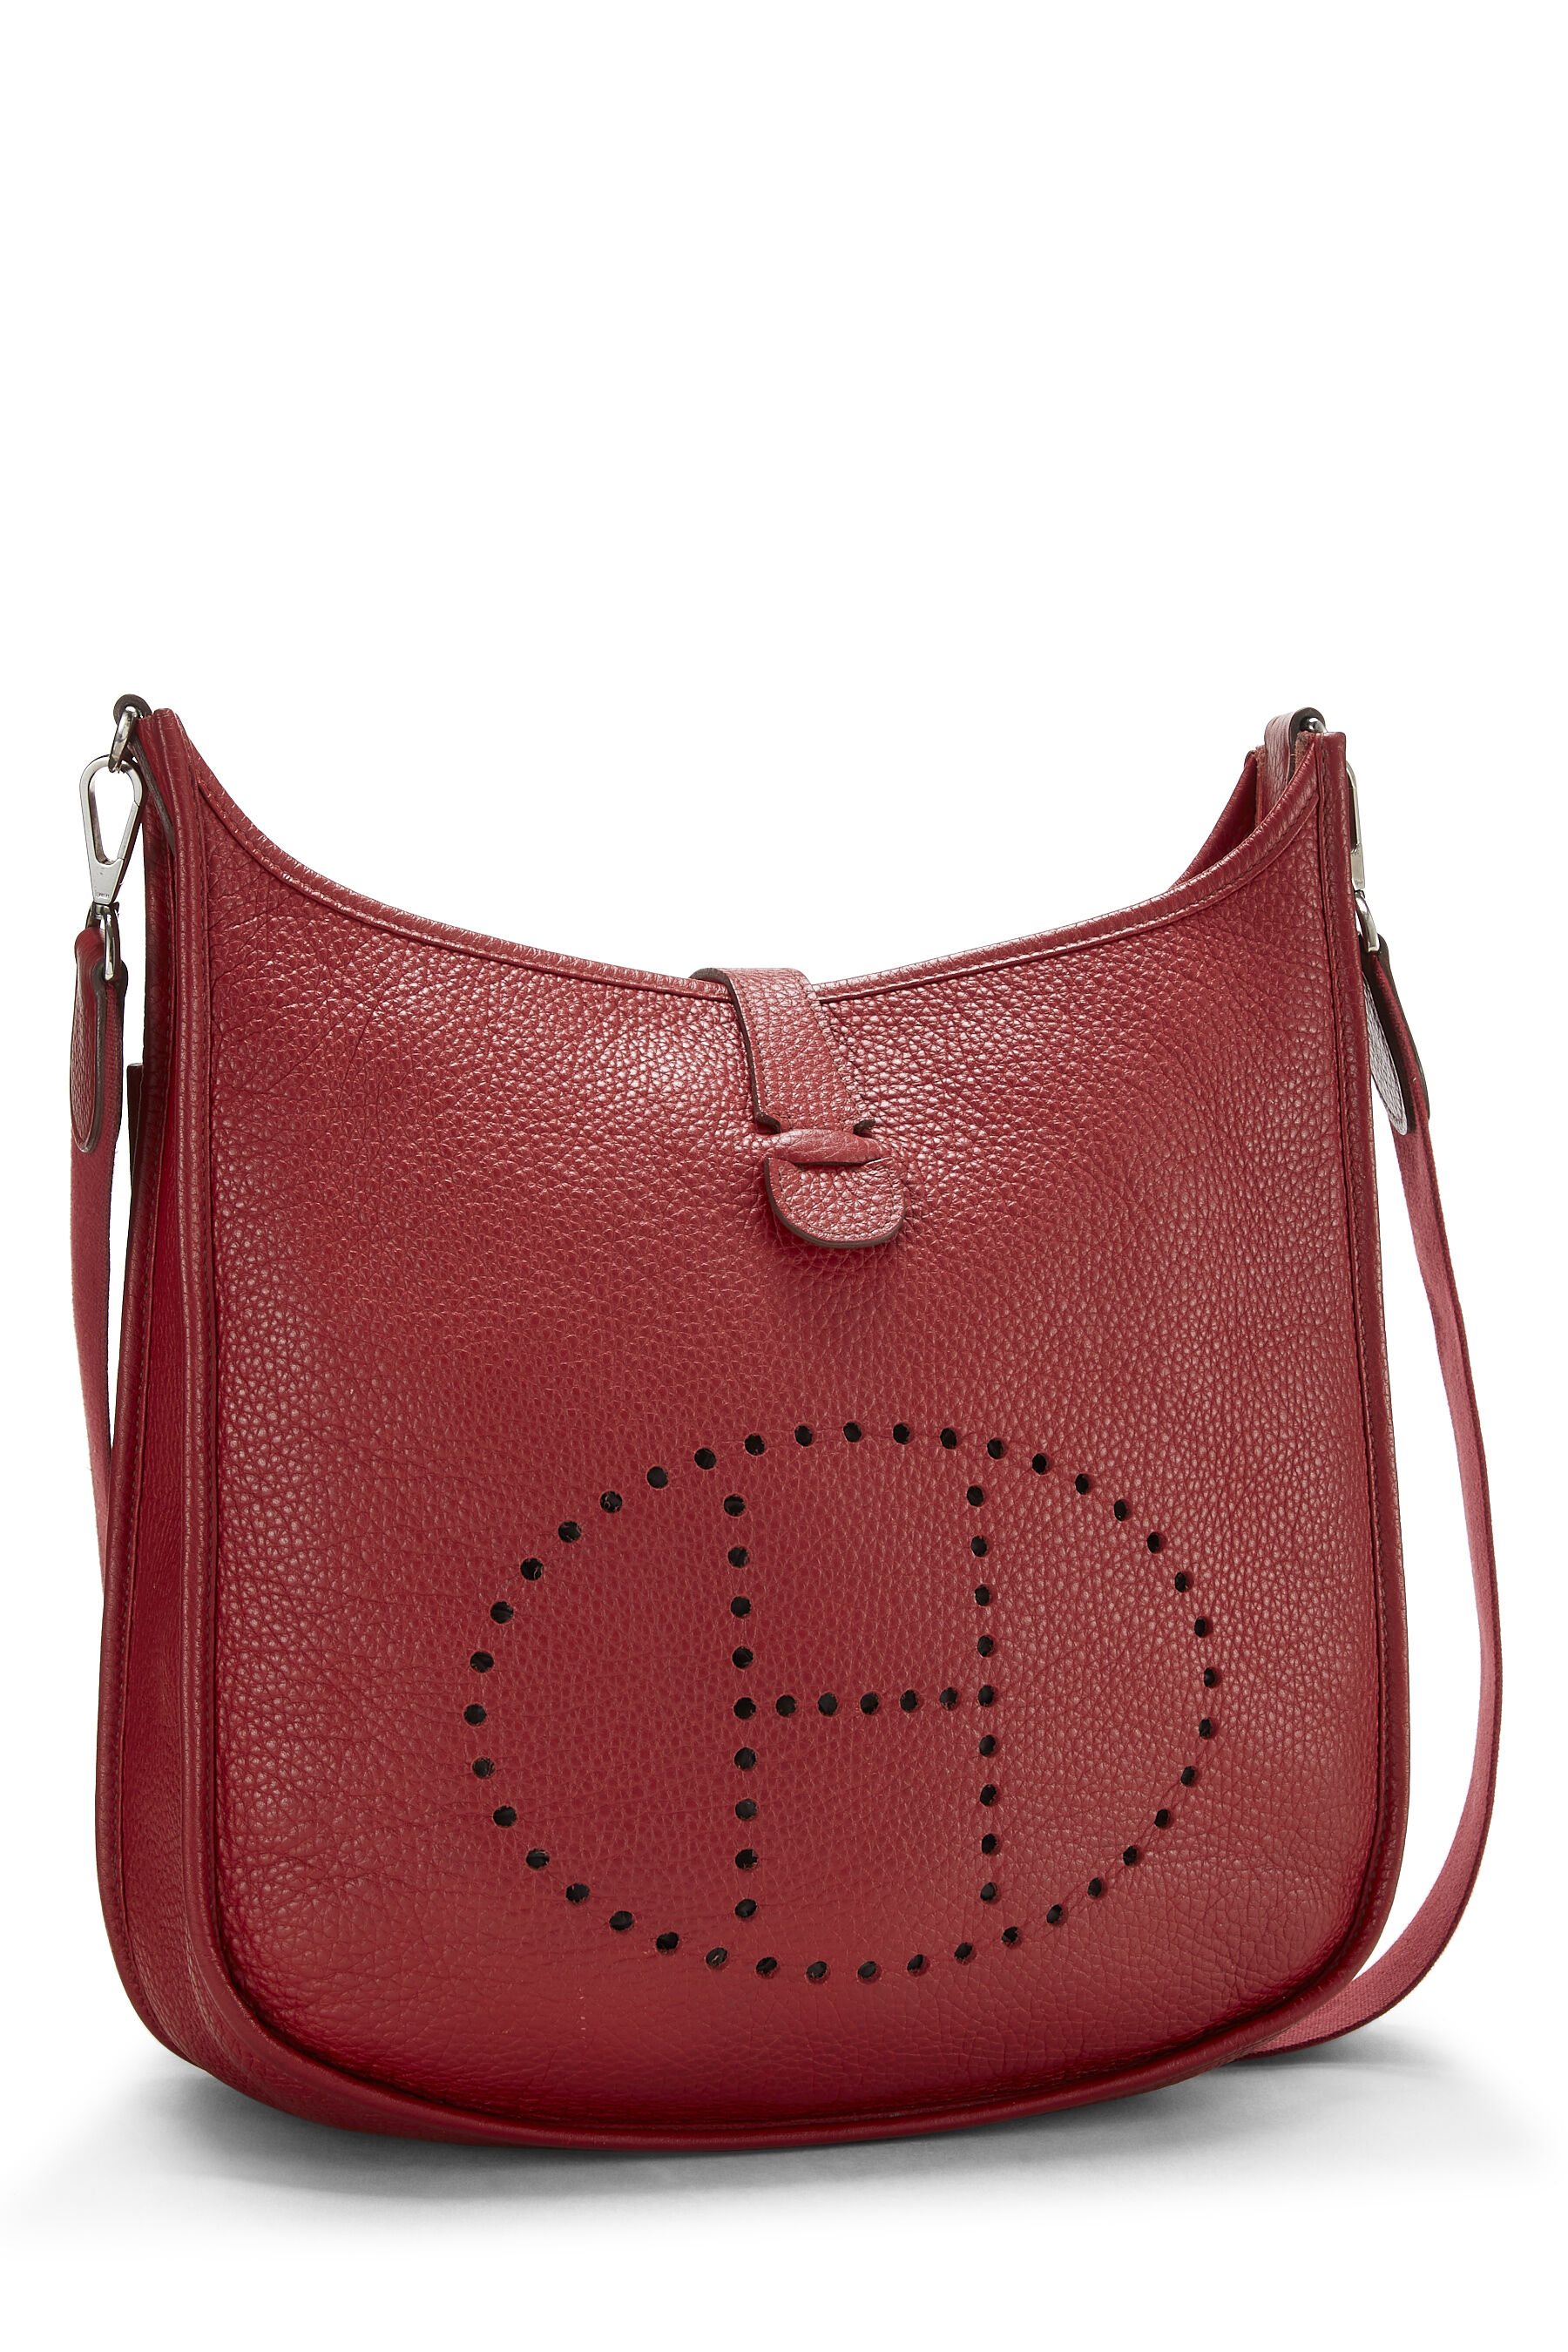 Hermès, Clemence Bougainvillier Red Evelyne